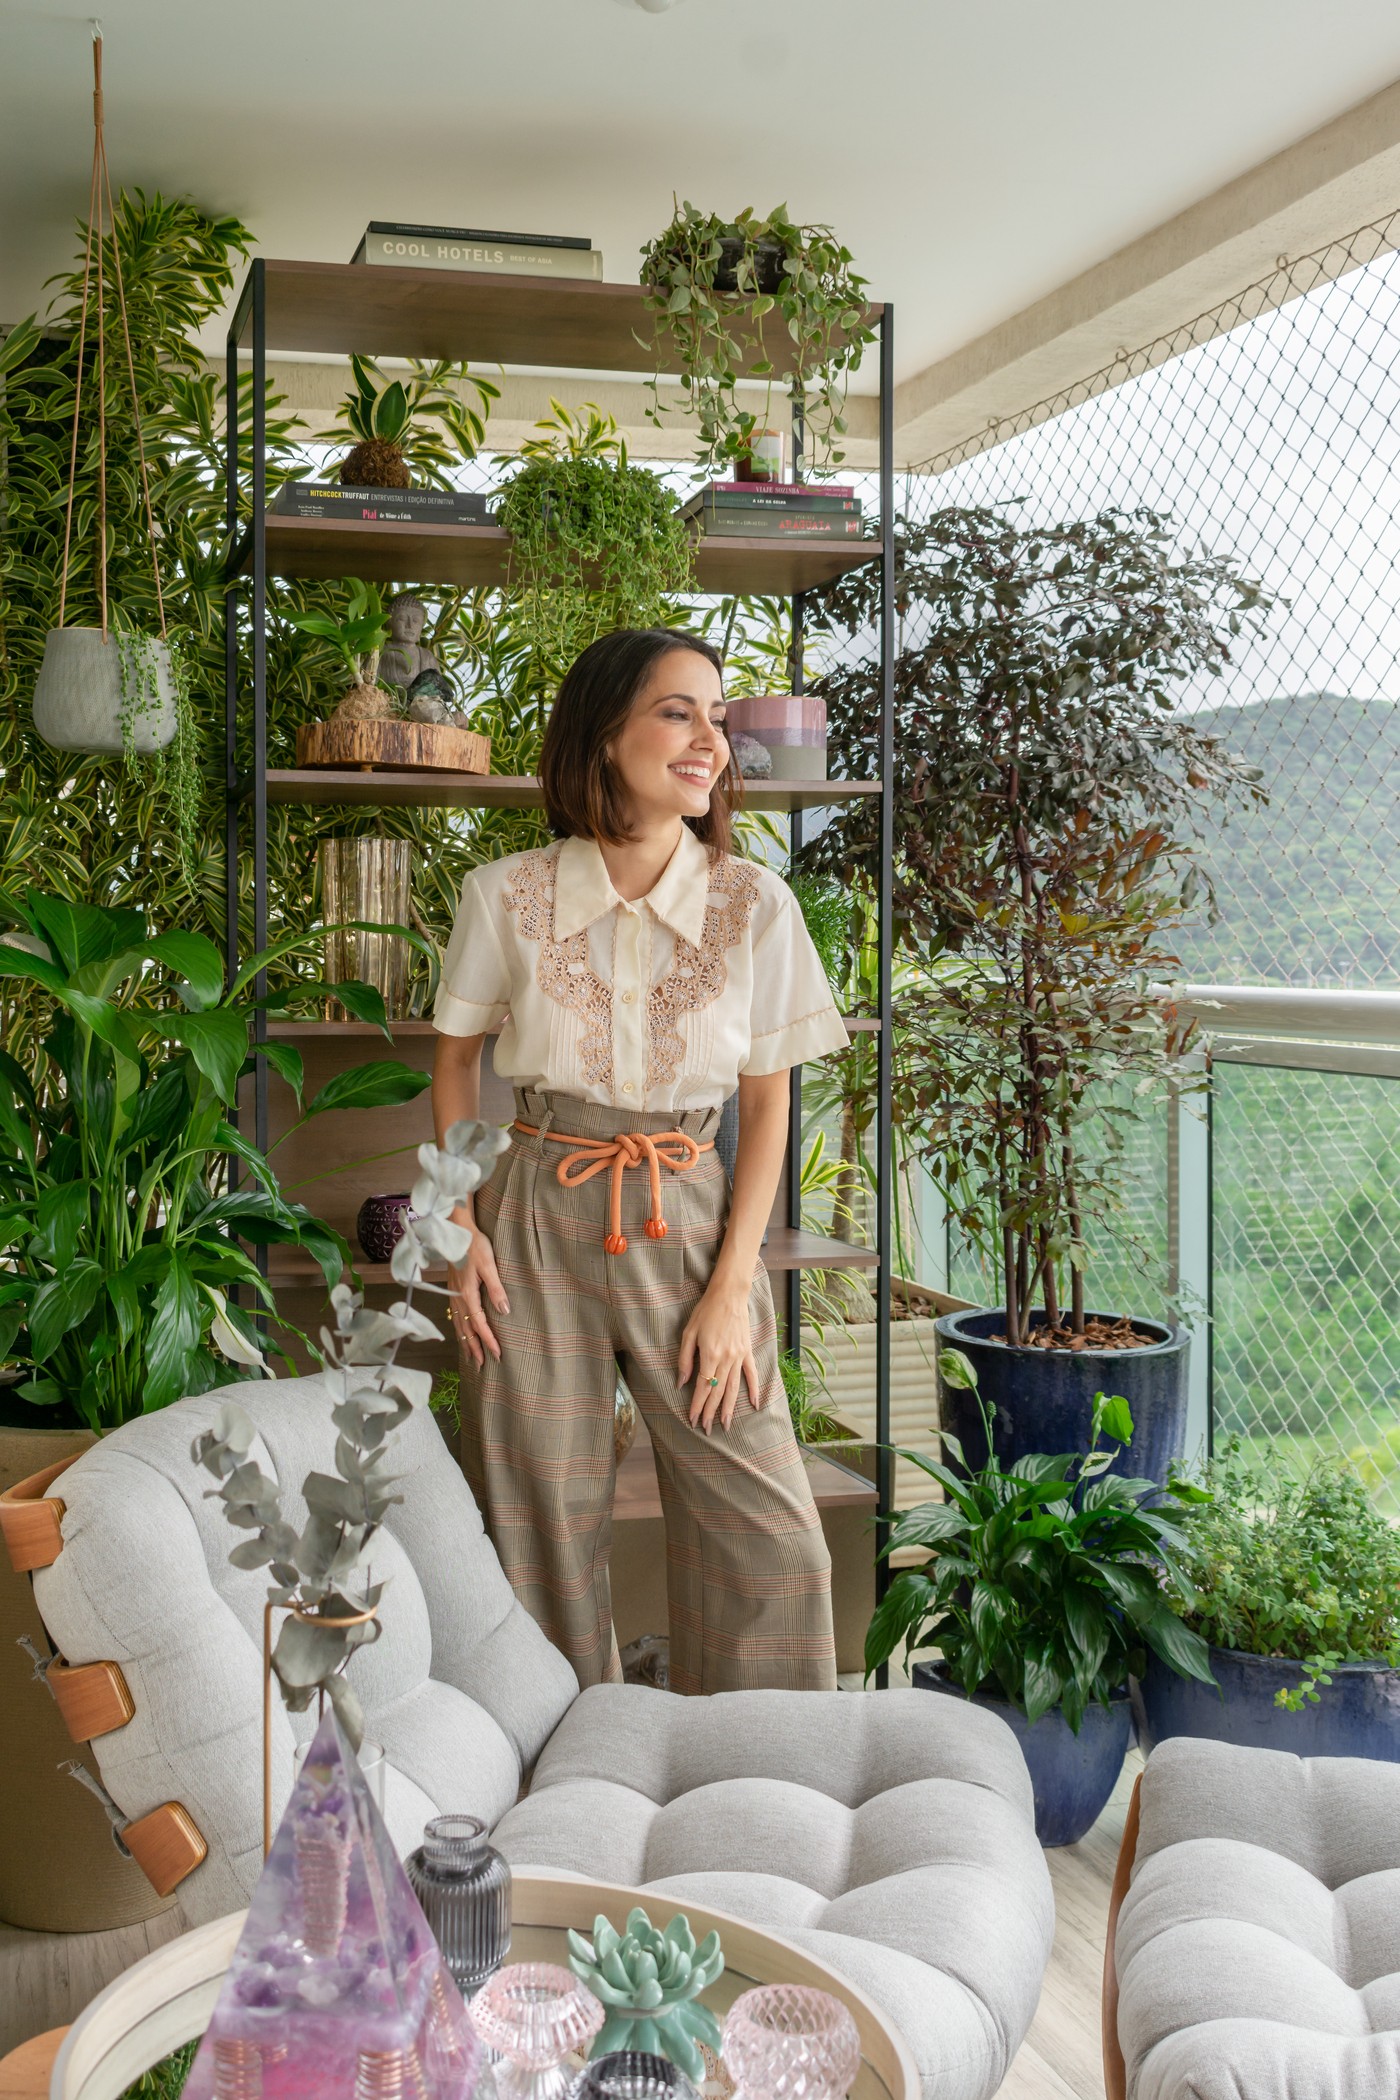 Maytê Piragibe mostra varanda inspirada em jardim encantado (Foto: Lília Mendel)